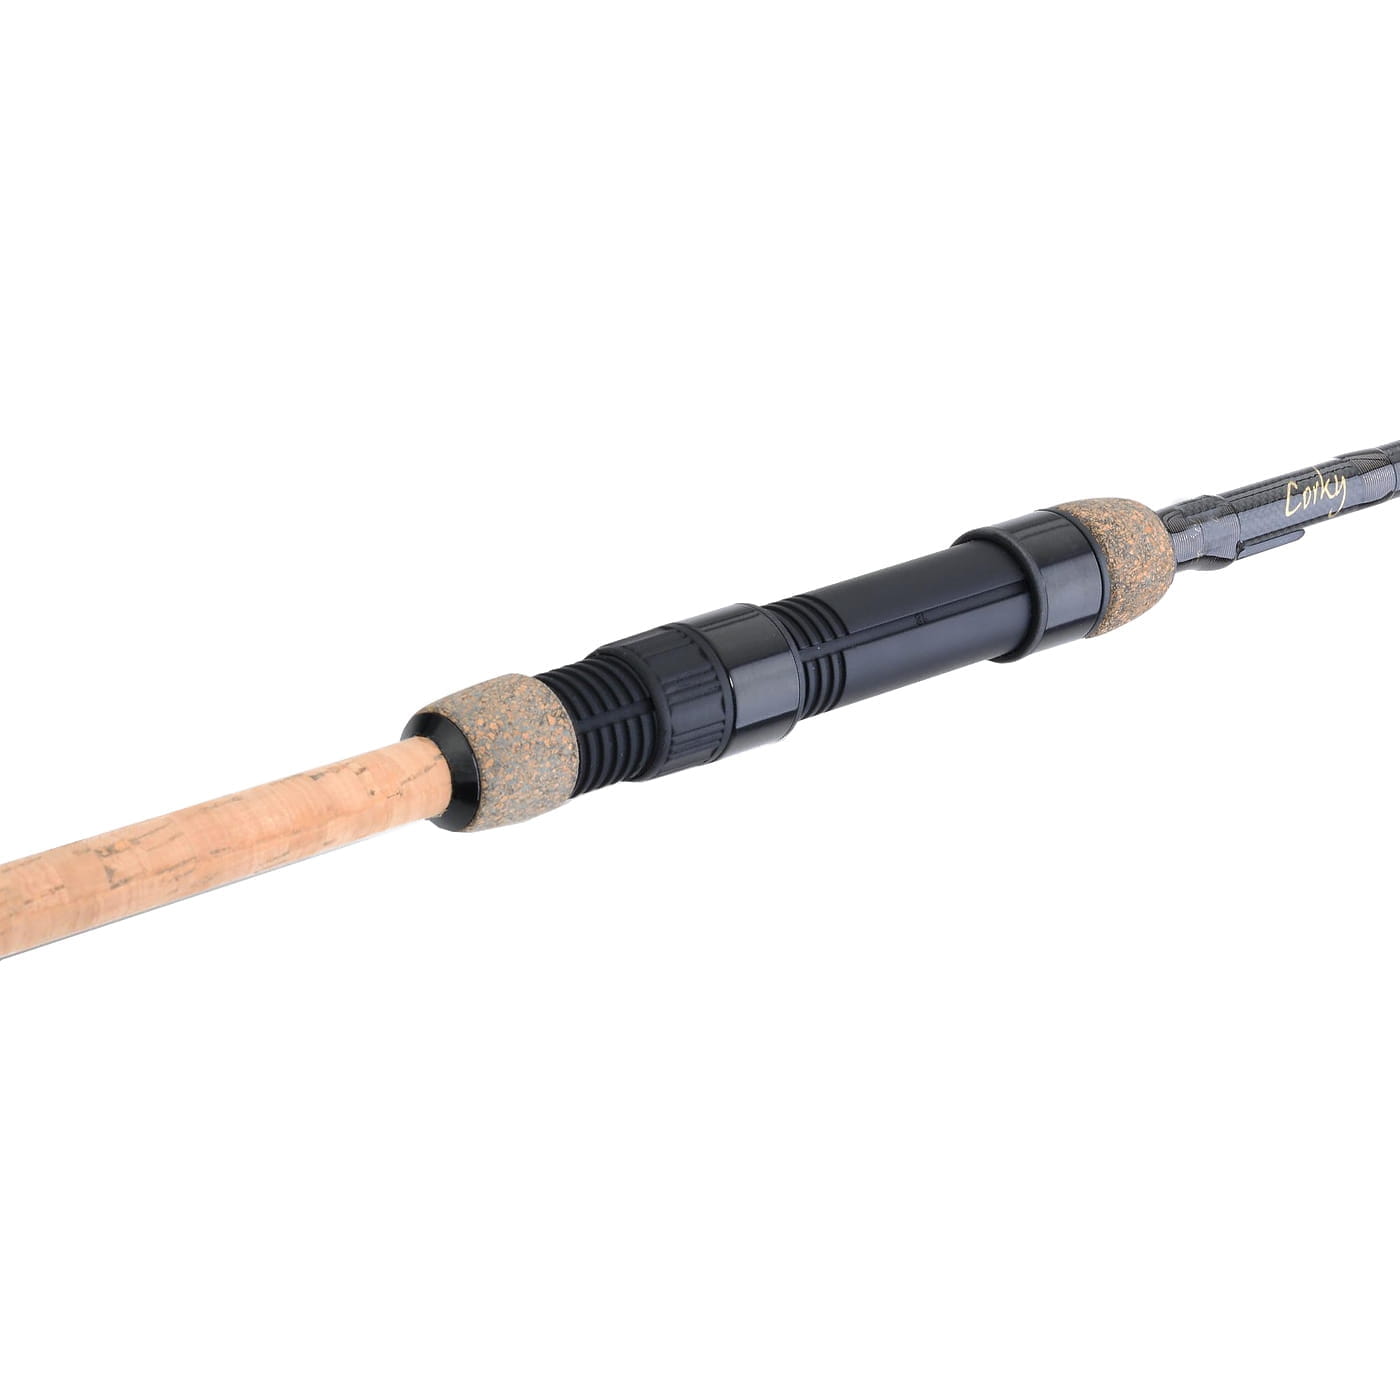 Daiwa Fishing Rod Case/Bag 175cm Thick Material